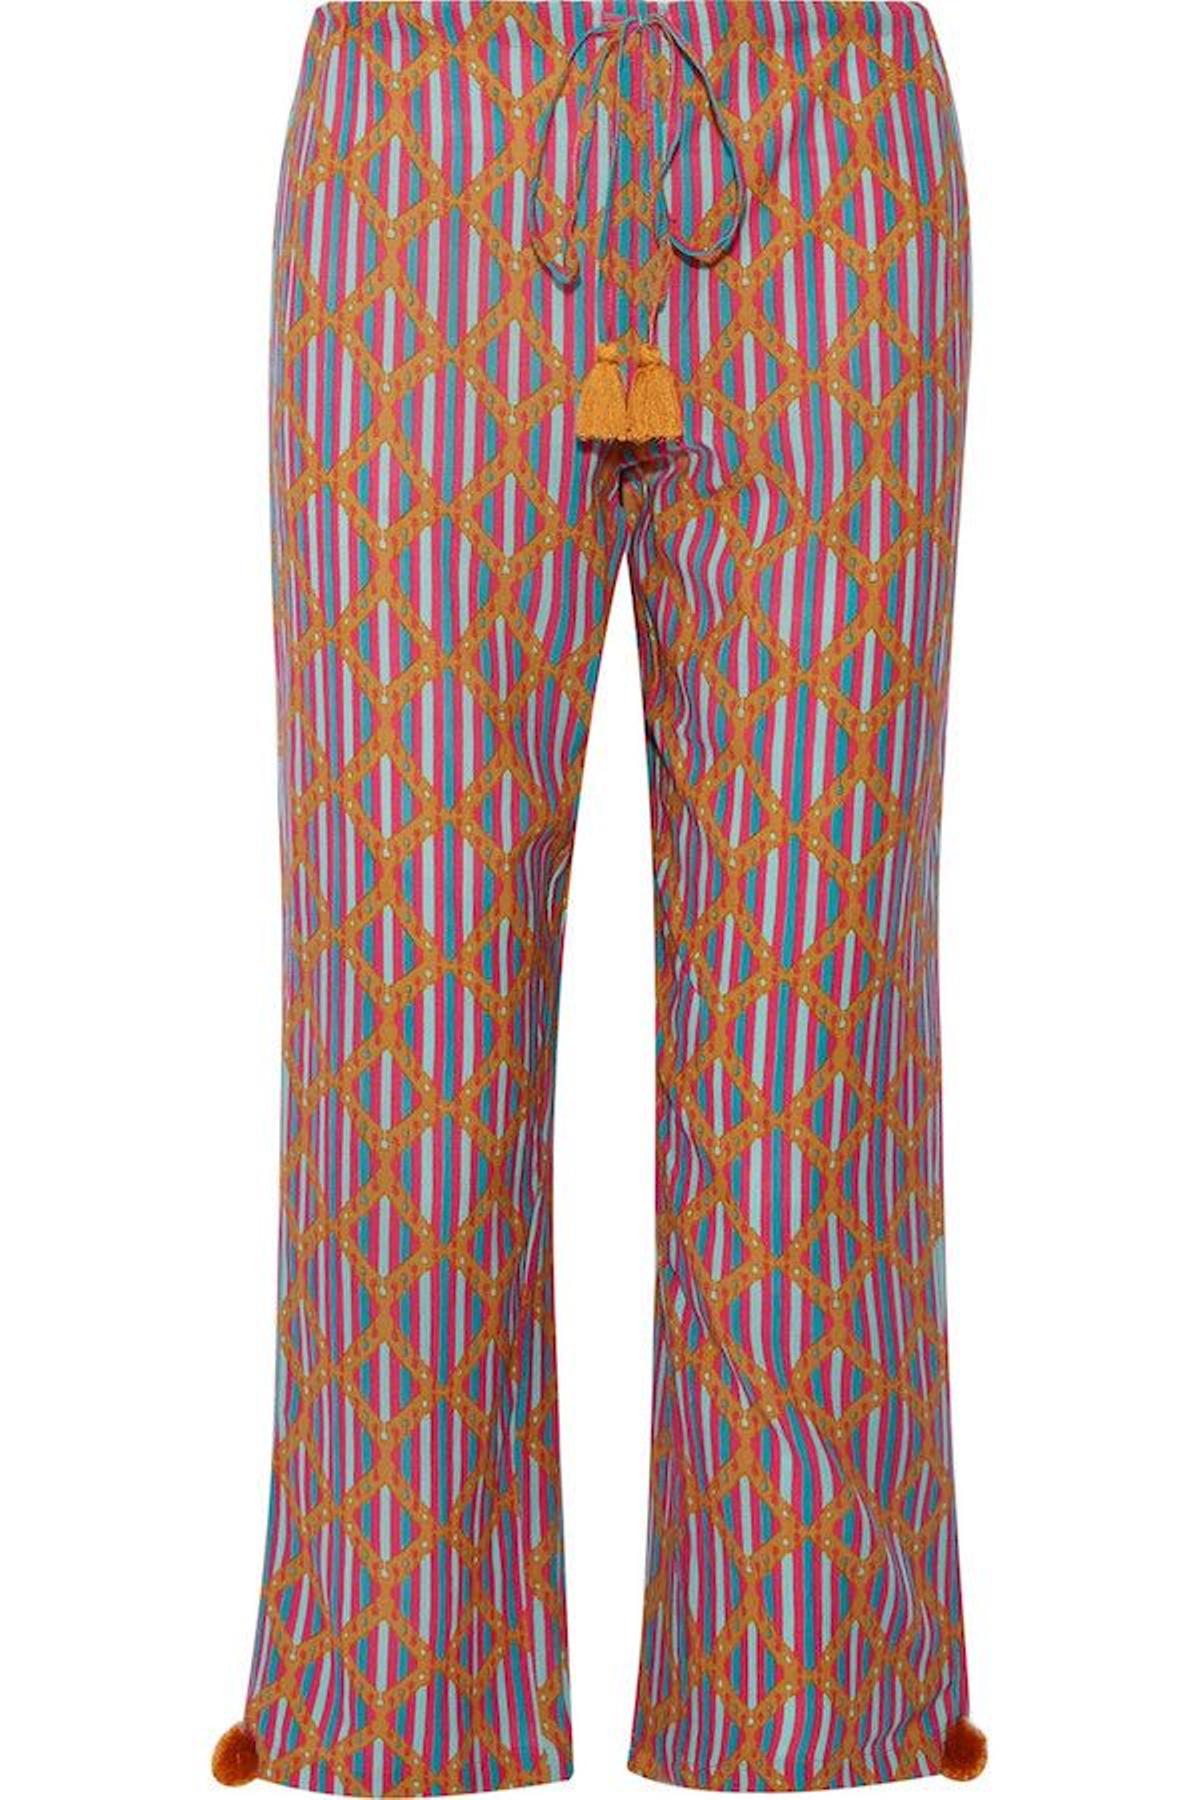 Pantalón con borla y pompón, de Figue, 295 euros